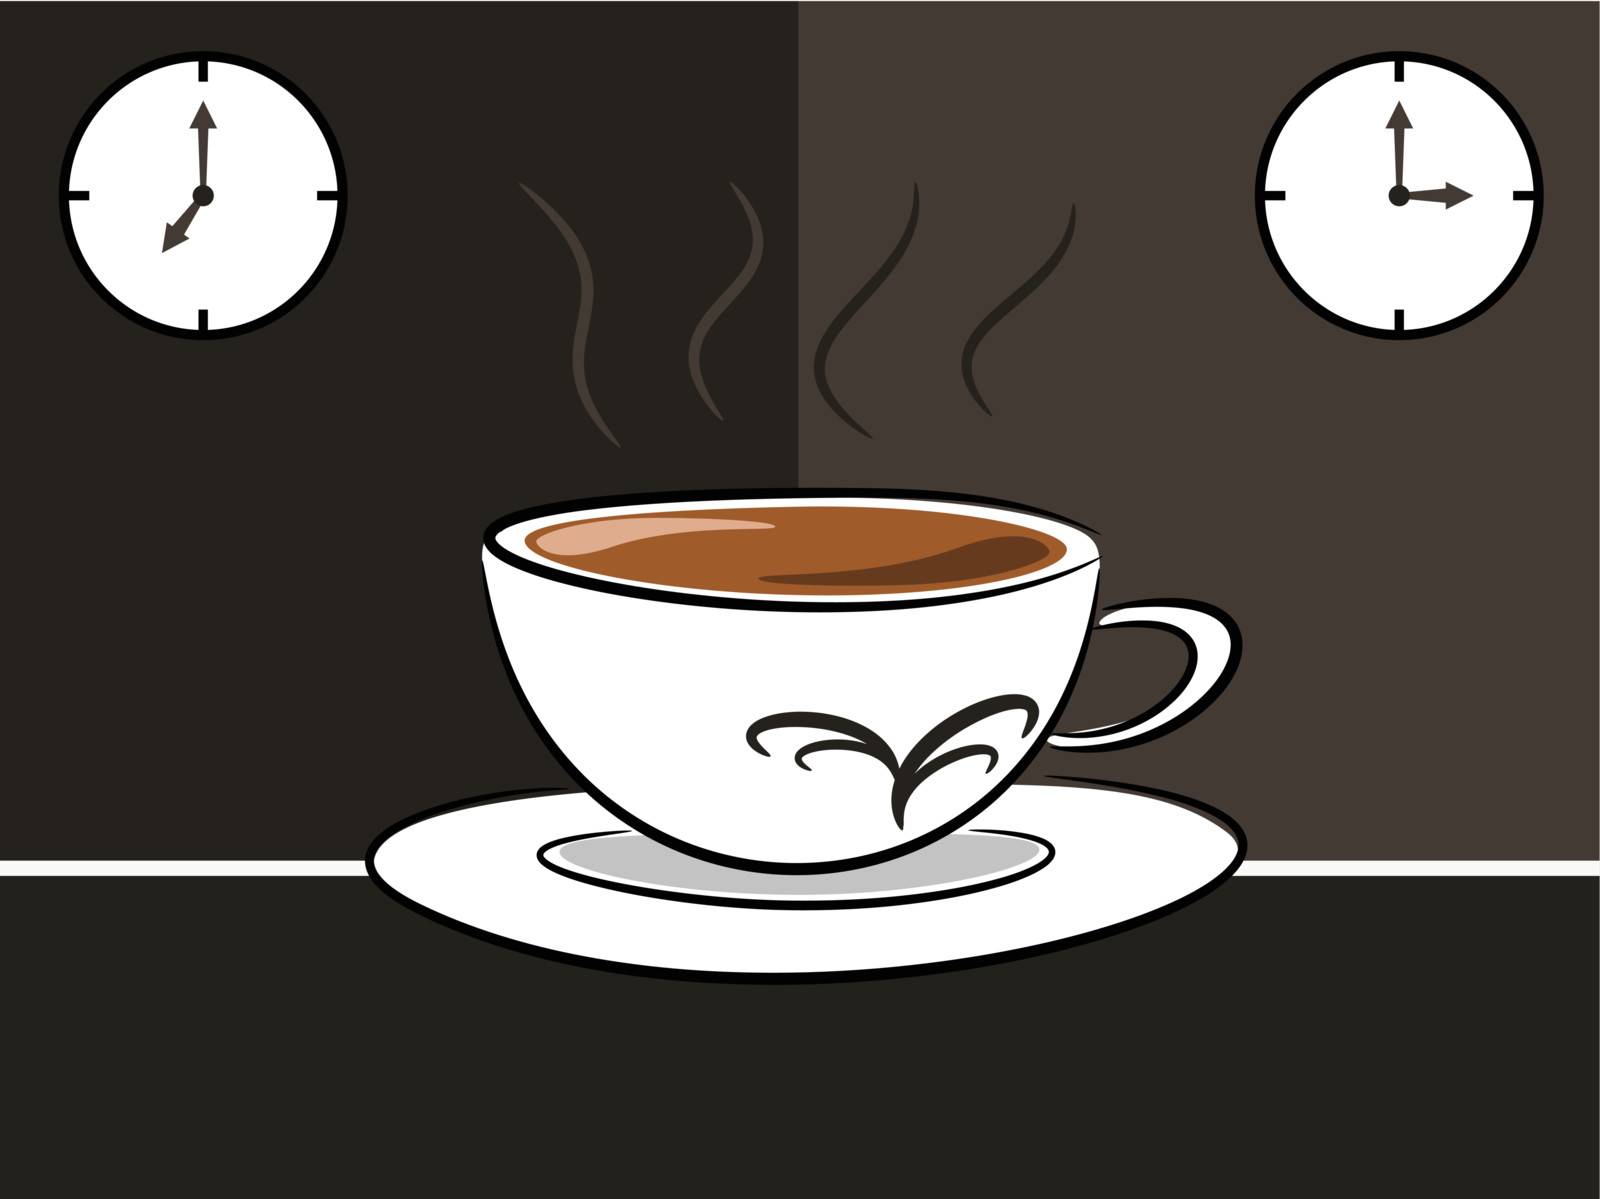 Coffee symbol in the break time concept illustration